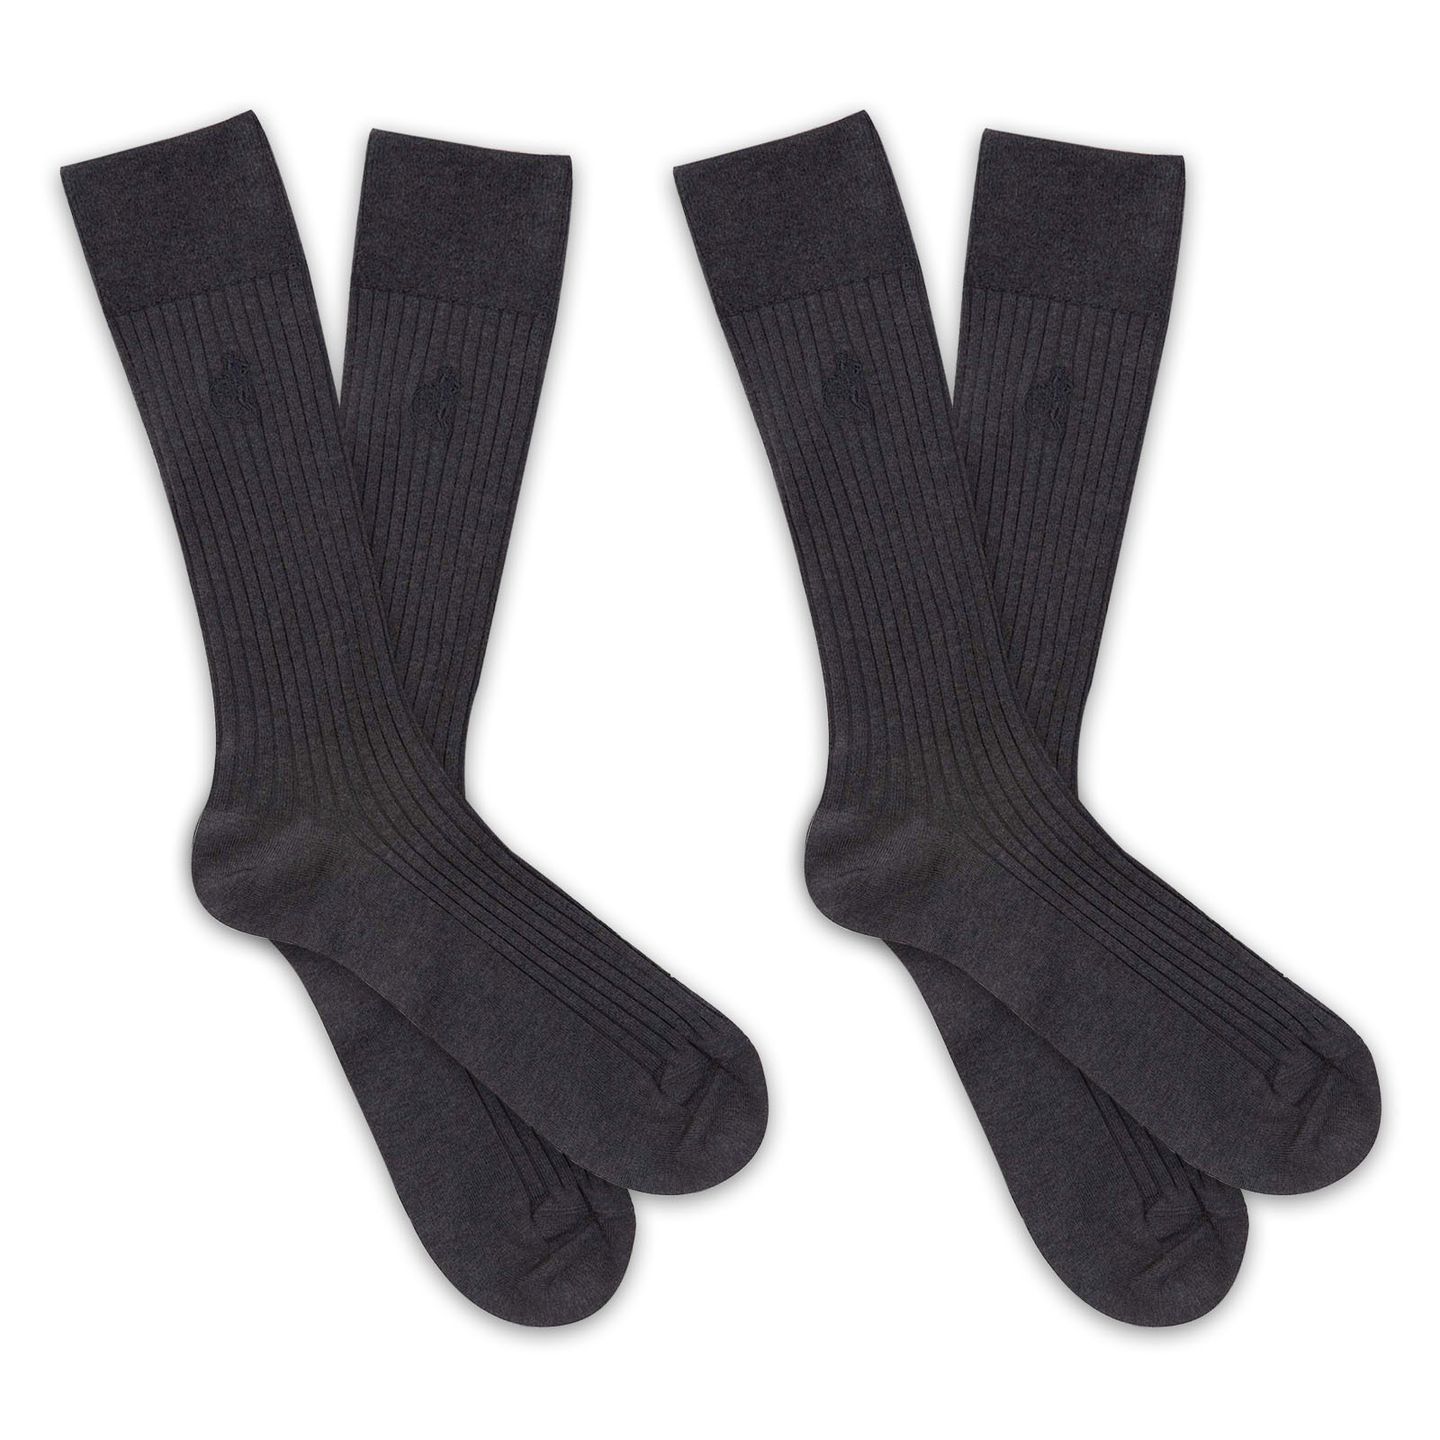 2 dark grey pairs of socks